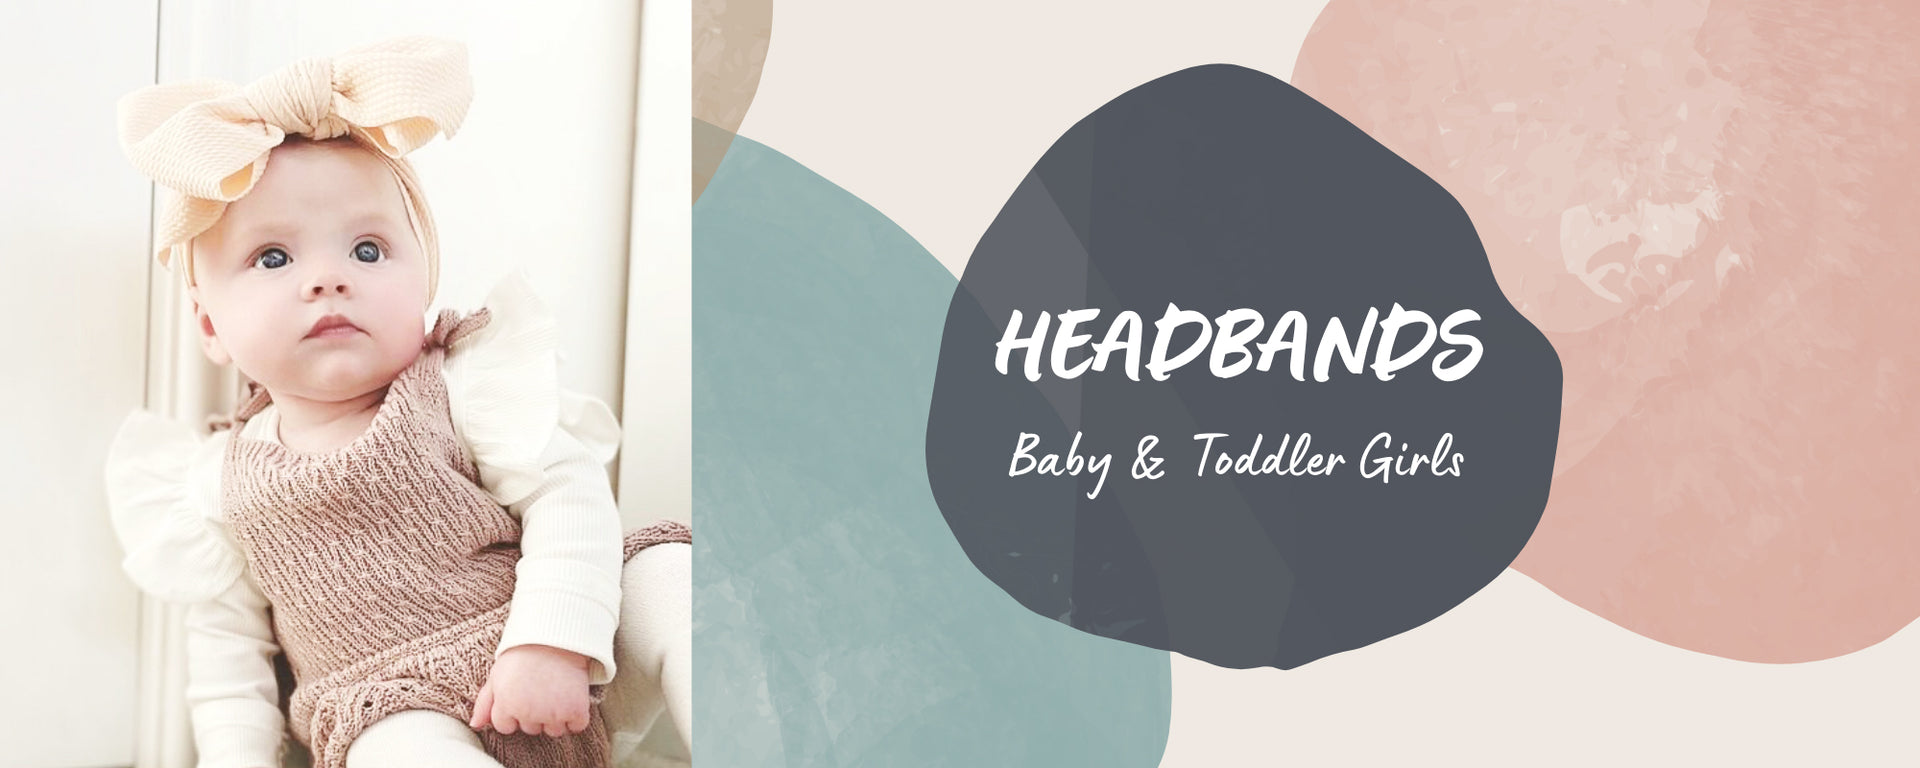 Baby Girl Headbands Baby Girl Newborn Bows Infant Hair Accessories Elastic  Turban Baby Girl Hair Ties Plain Color